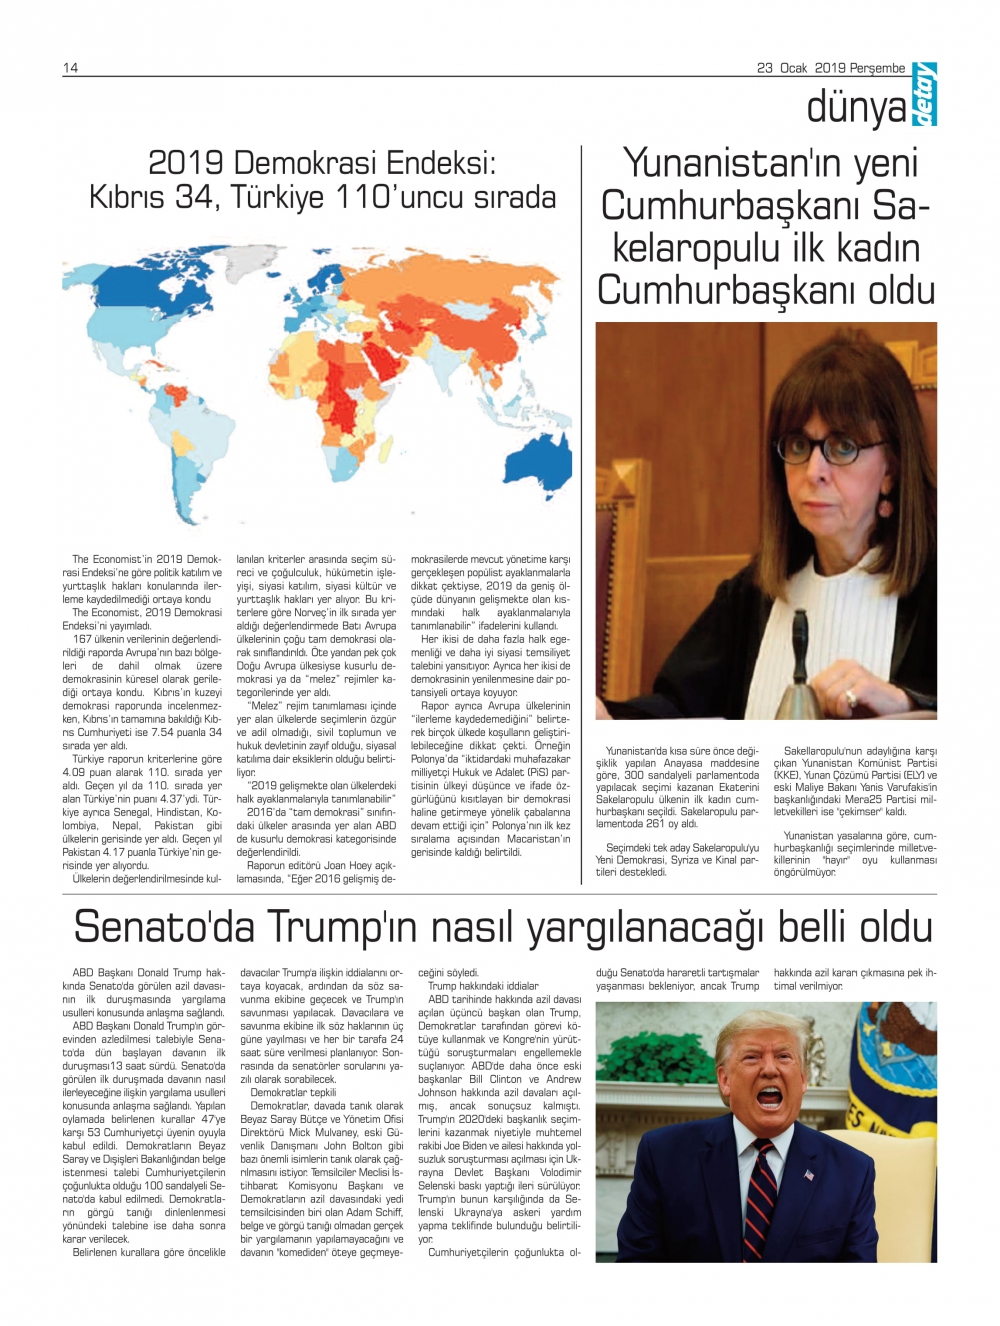 Detay Gazetes 23 Ocak 2020 galerisi resim 11